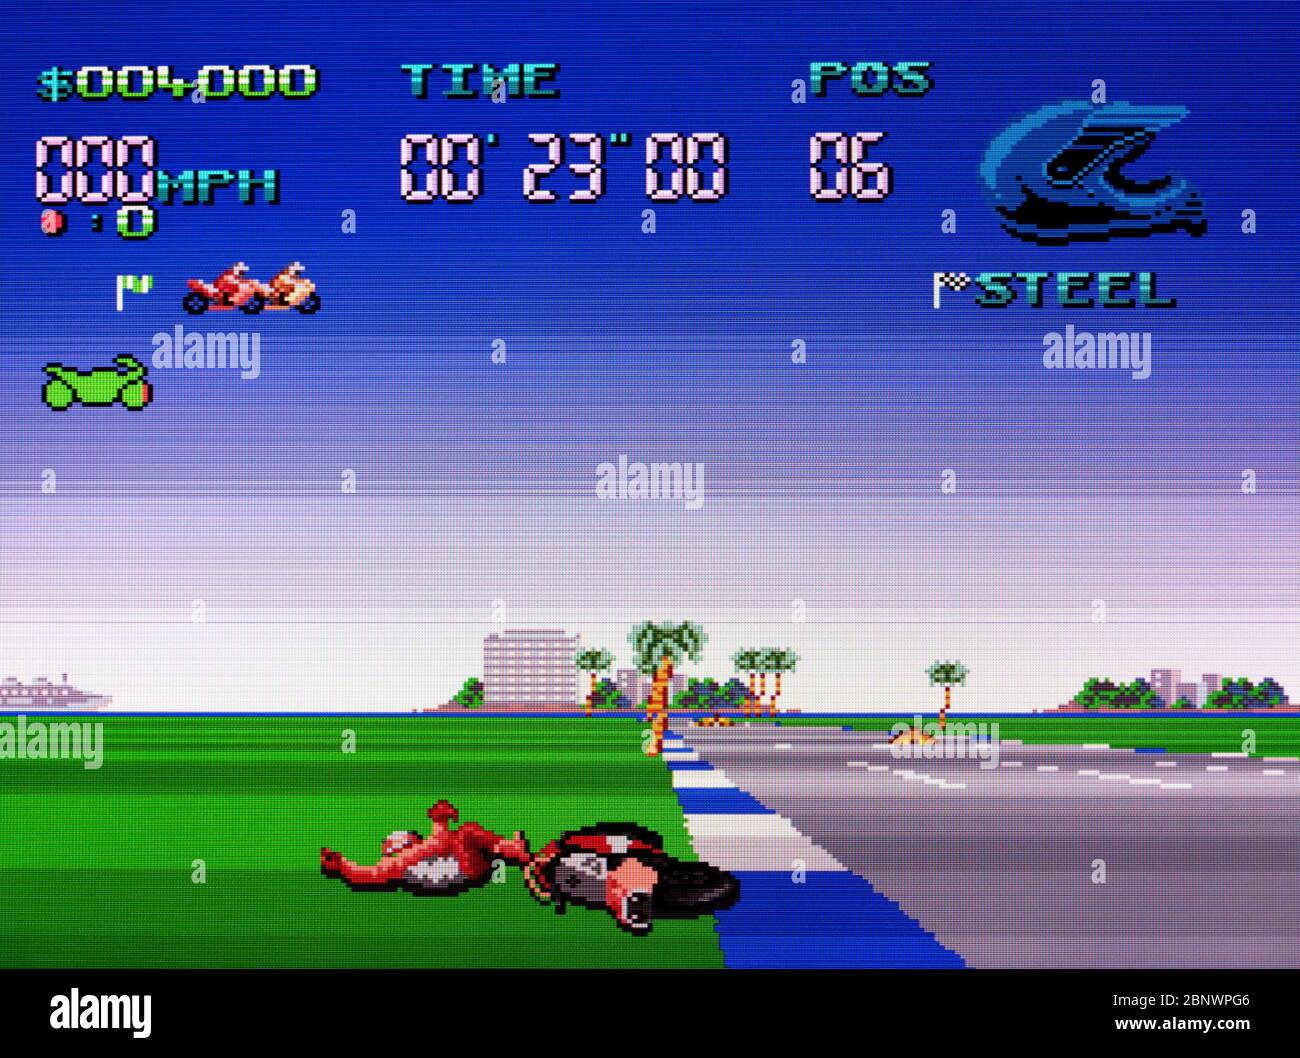 FTR Full Throttle Racing - SNES Super Nintendo - solo per uso editoriale Foto Stock